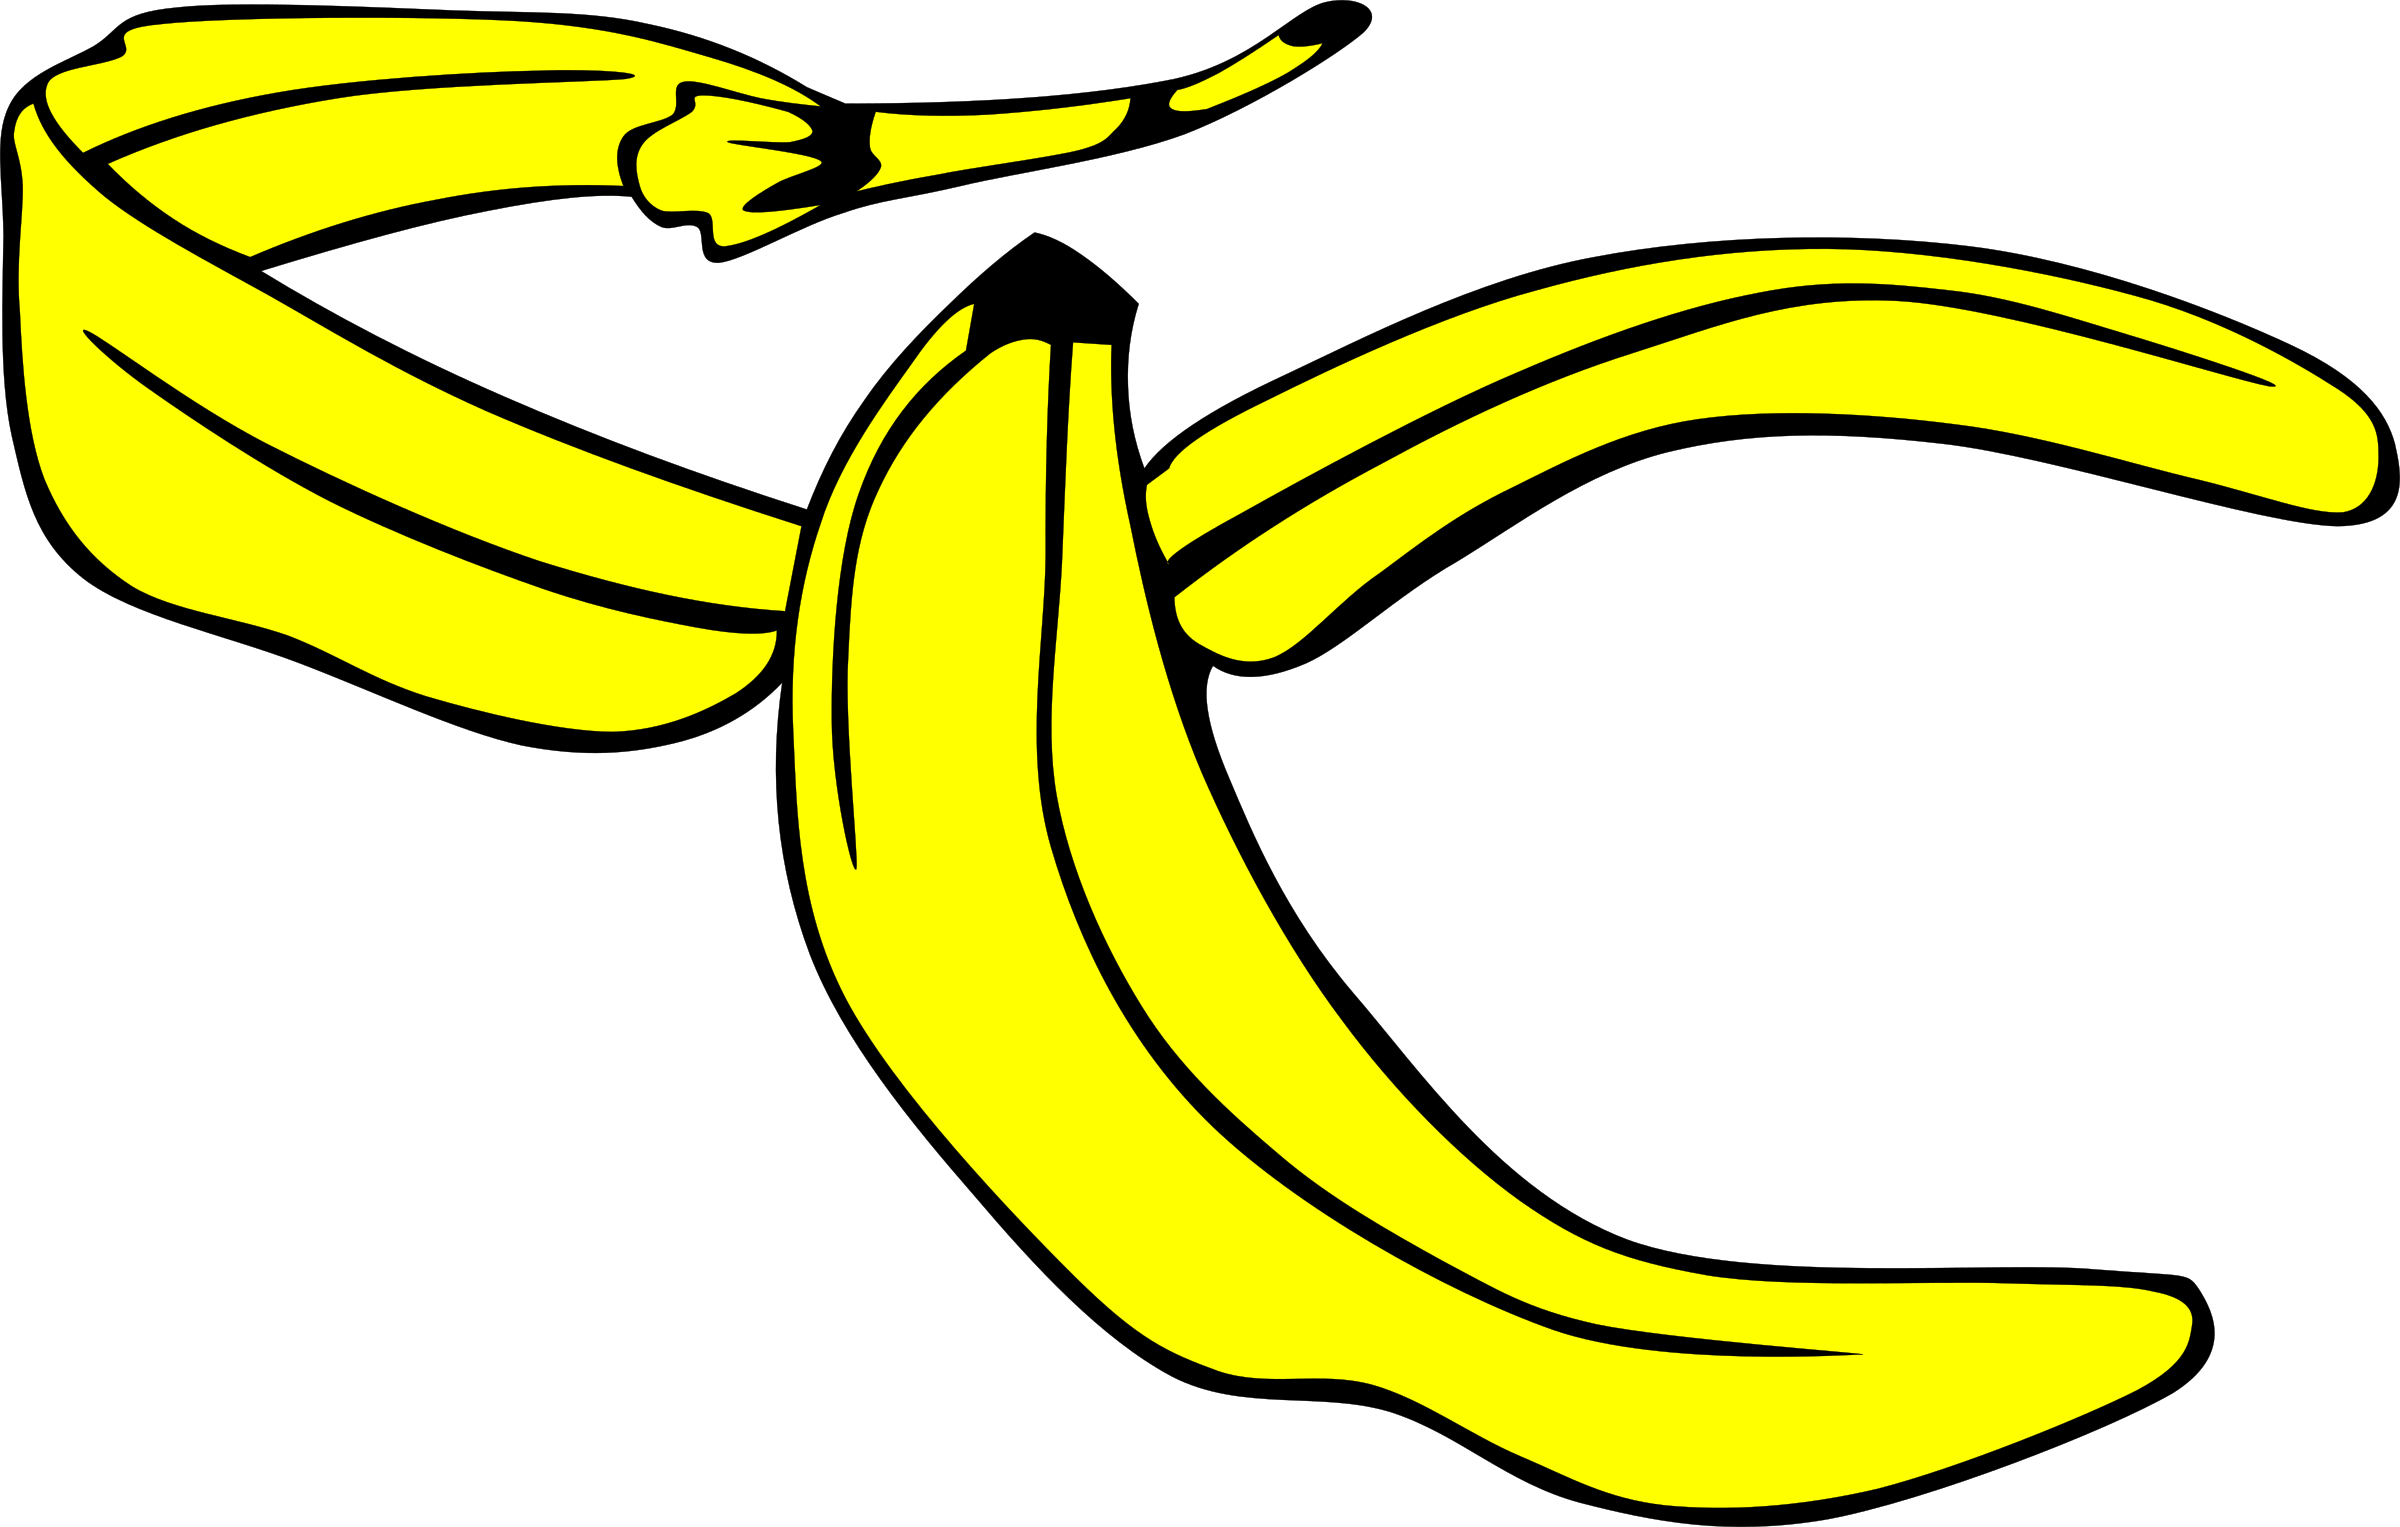 Clipart banana svg. Peel icons png free